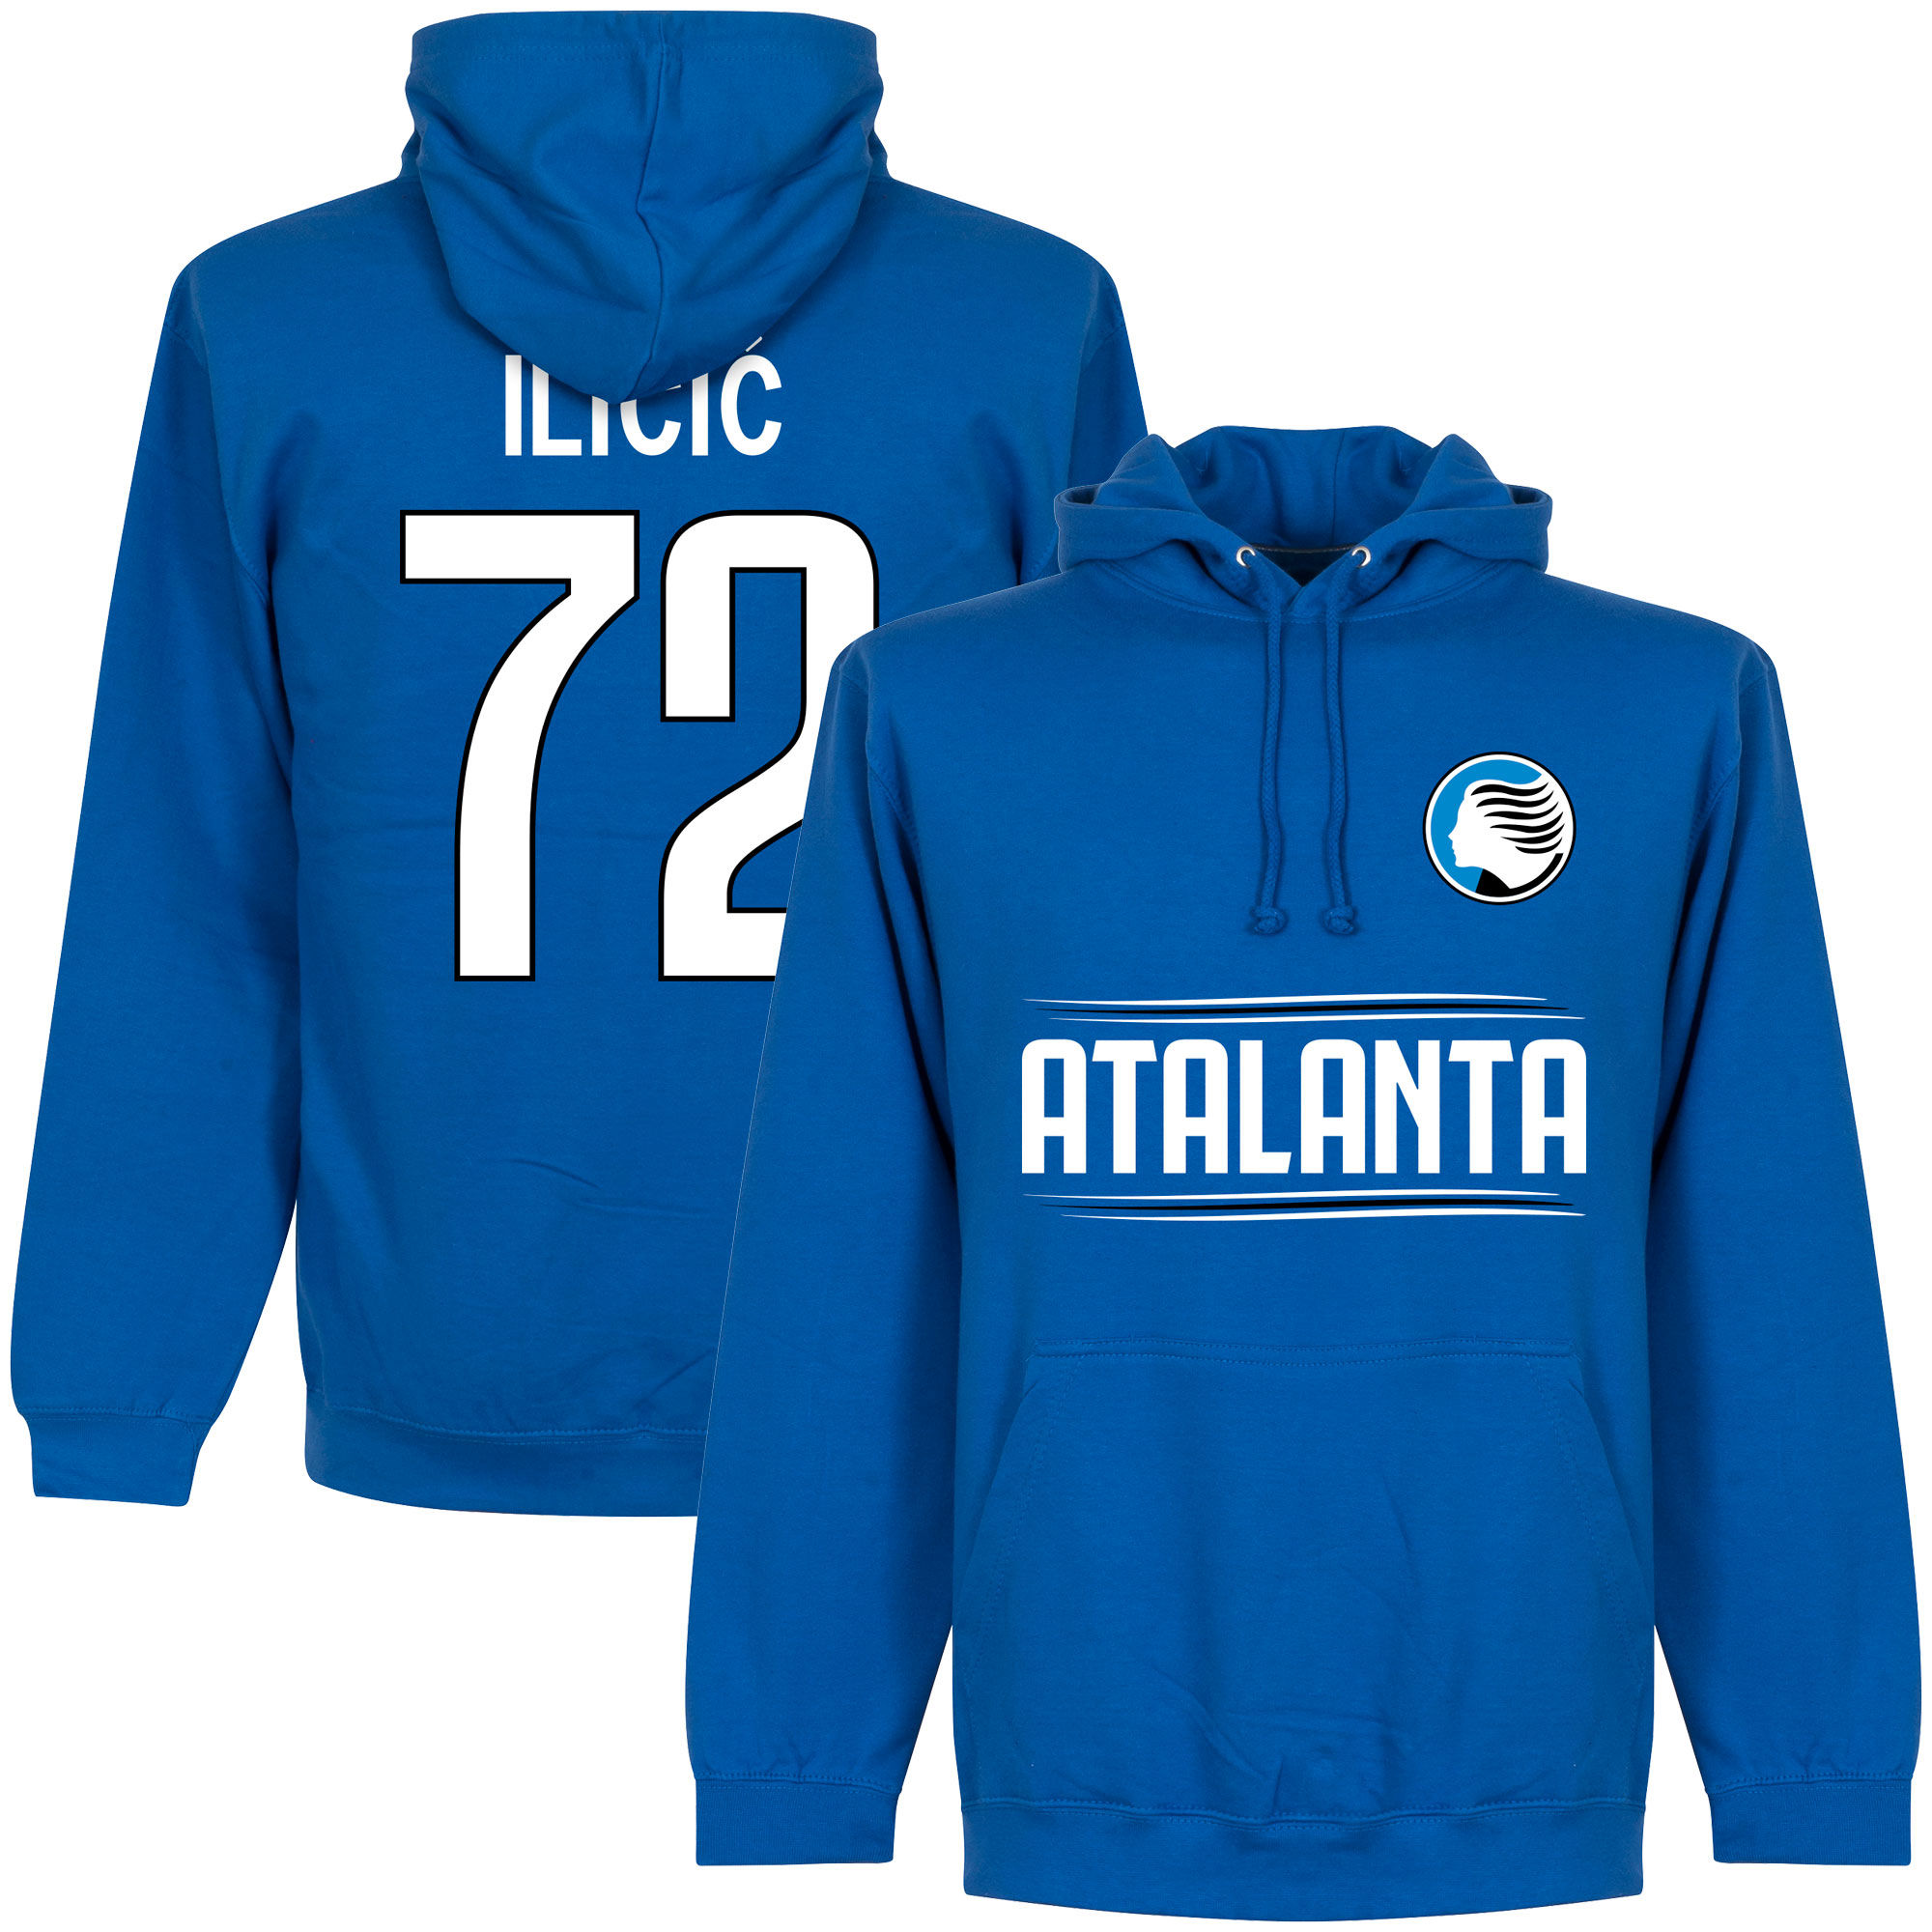 Atalanta BC - Mikina s kapucí - číslo 72, Josip Iličić, modrá